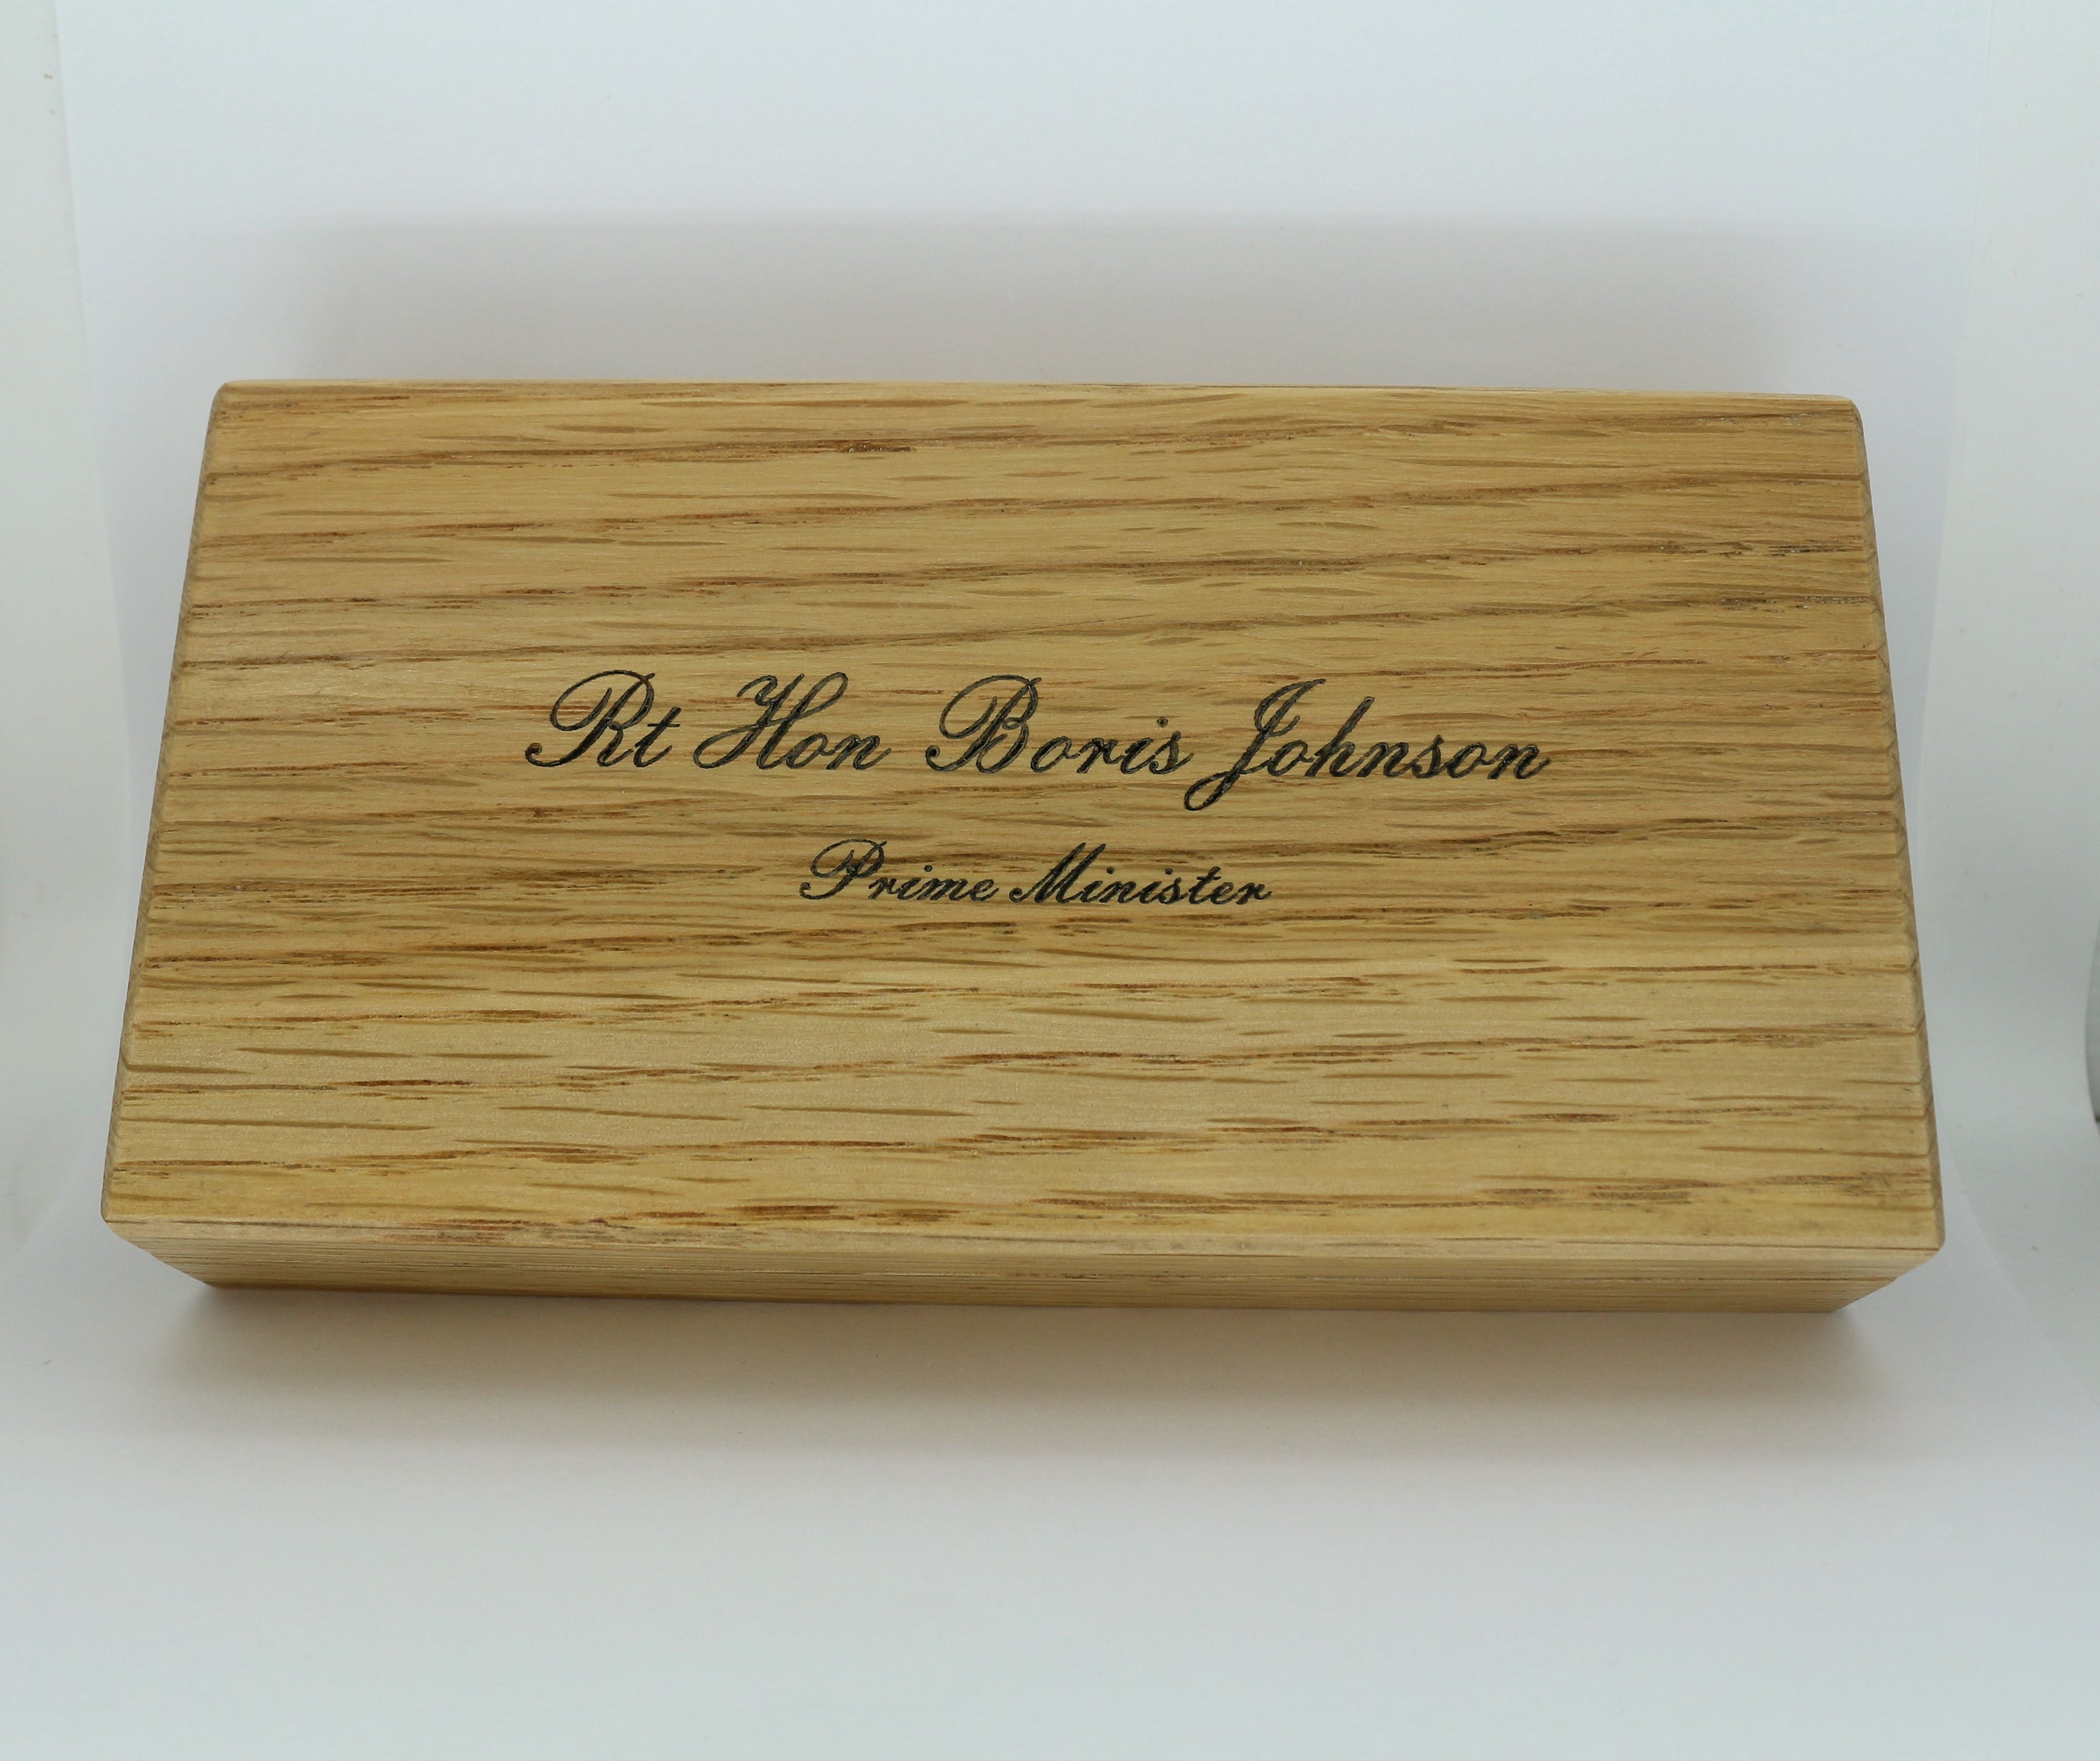 Presentation box with Boris Johnson engraved on the lid